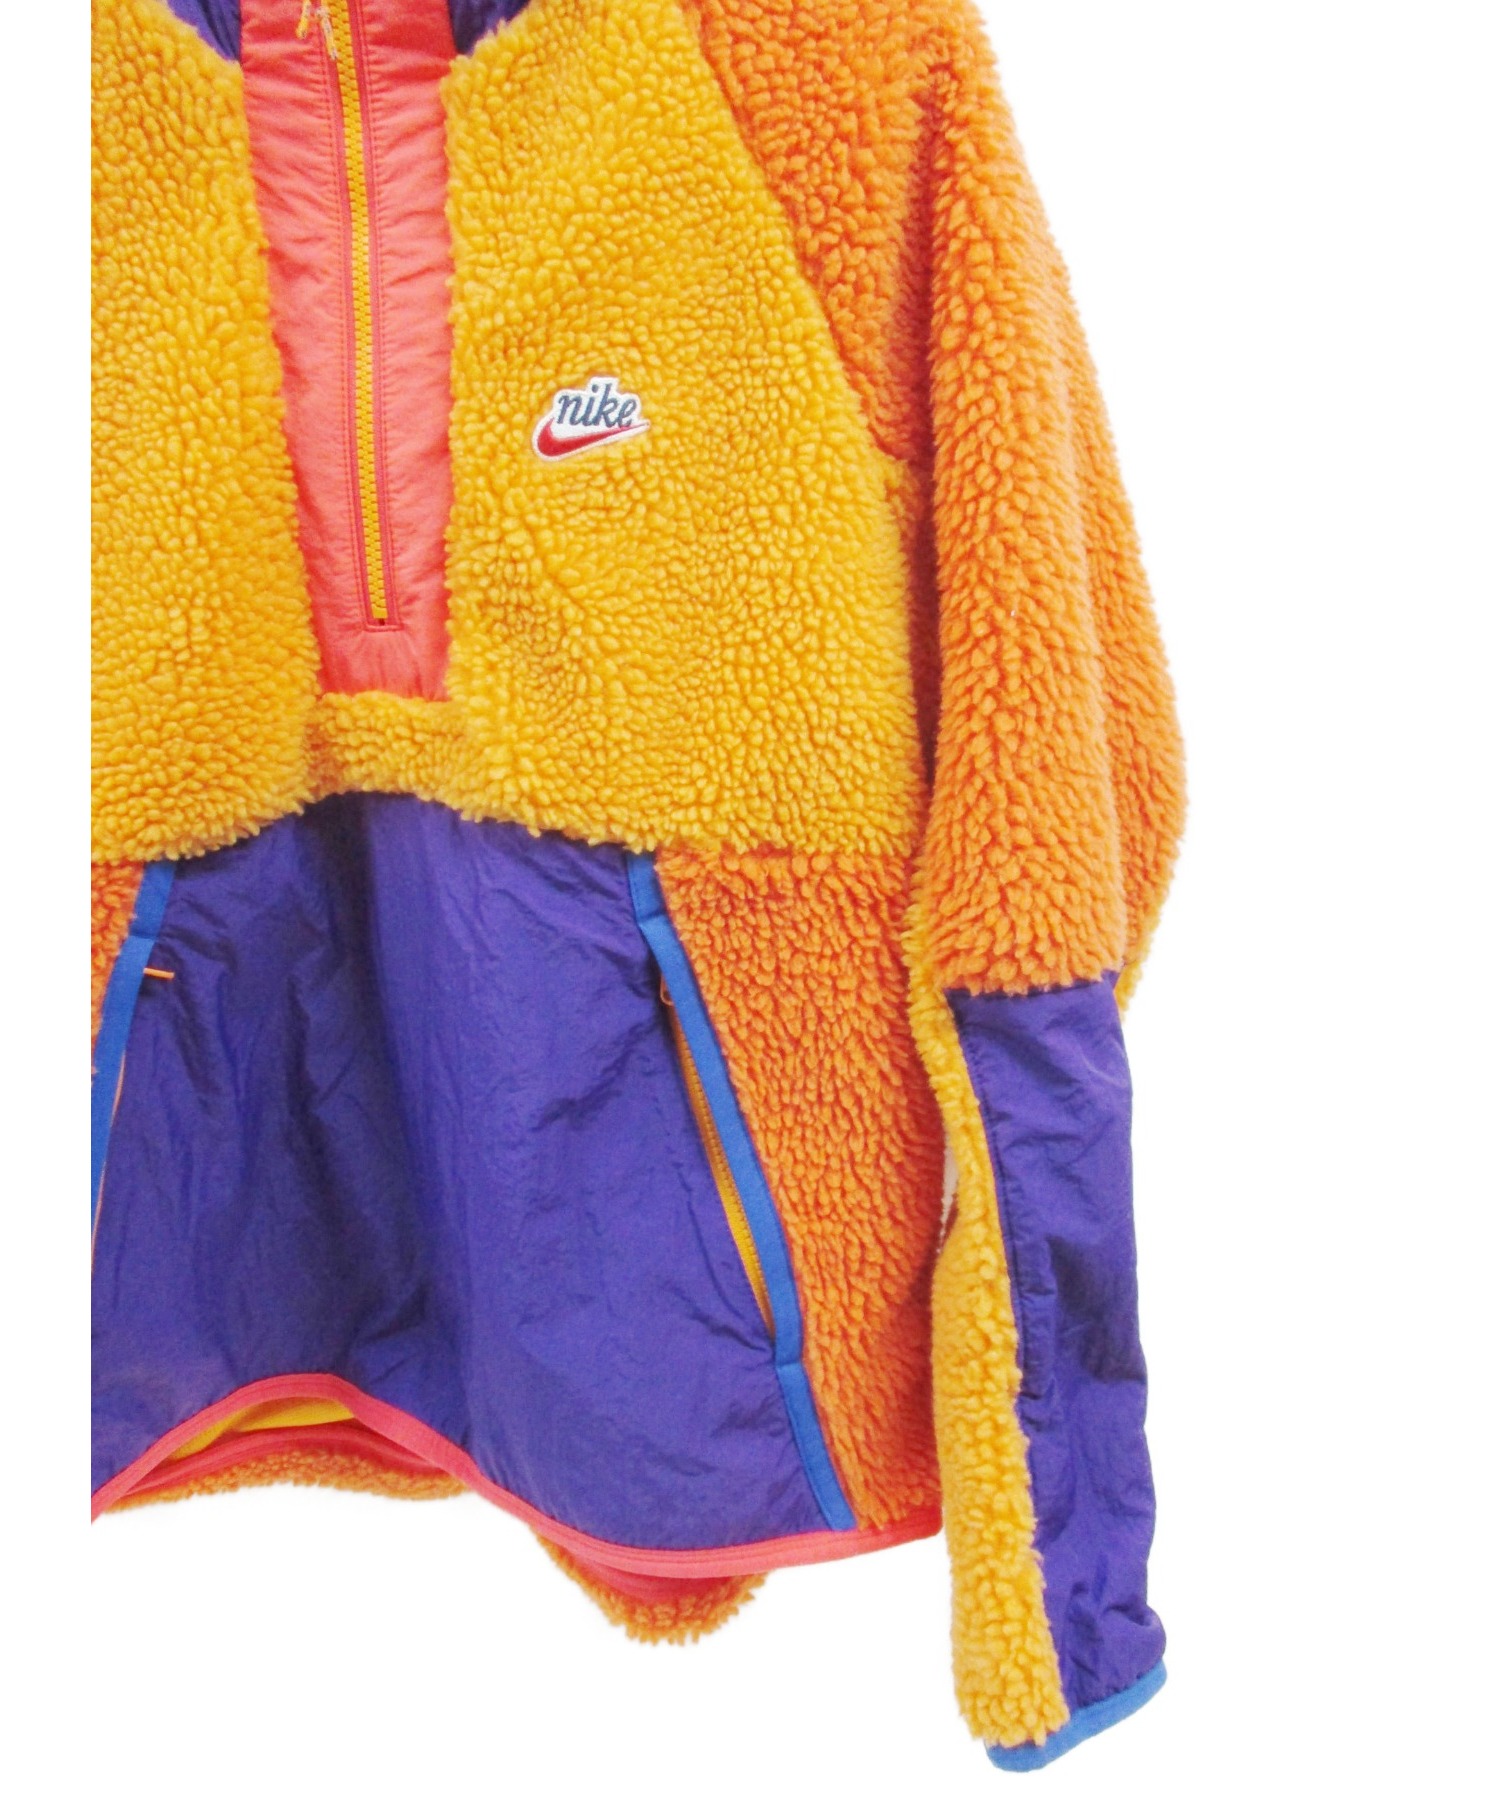 NIKE (ナイキ) フリースジャケット オレンジ×パープル サイズ:M